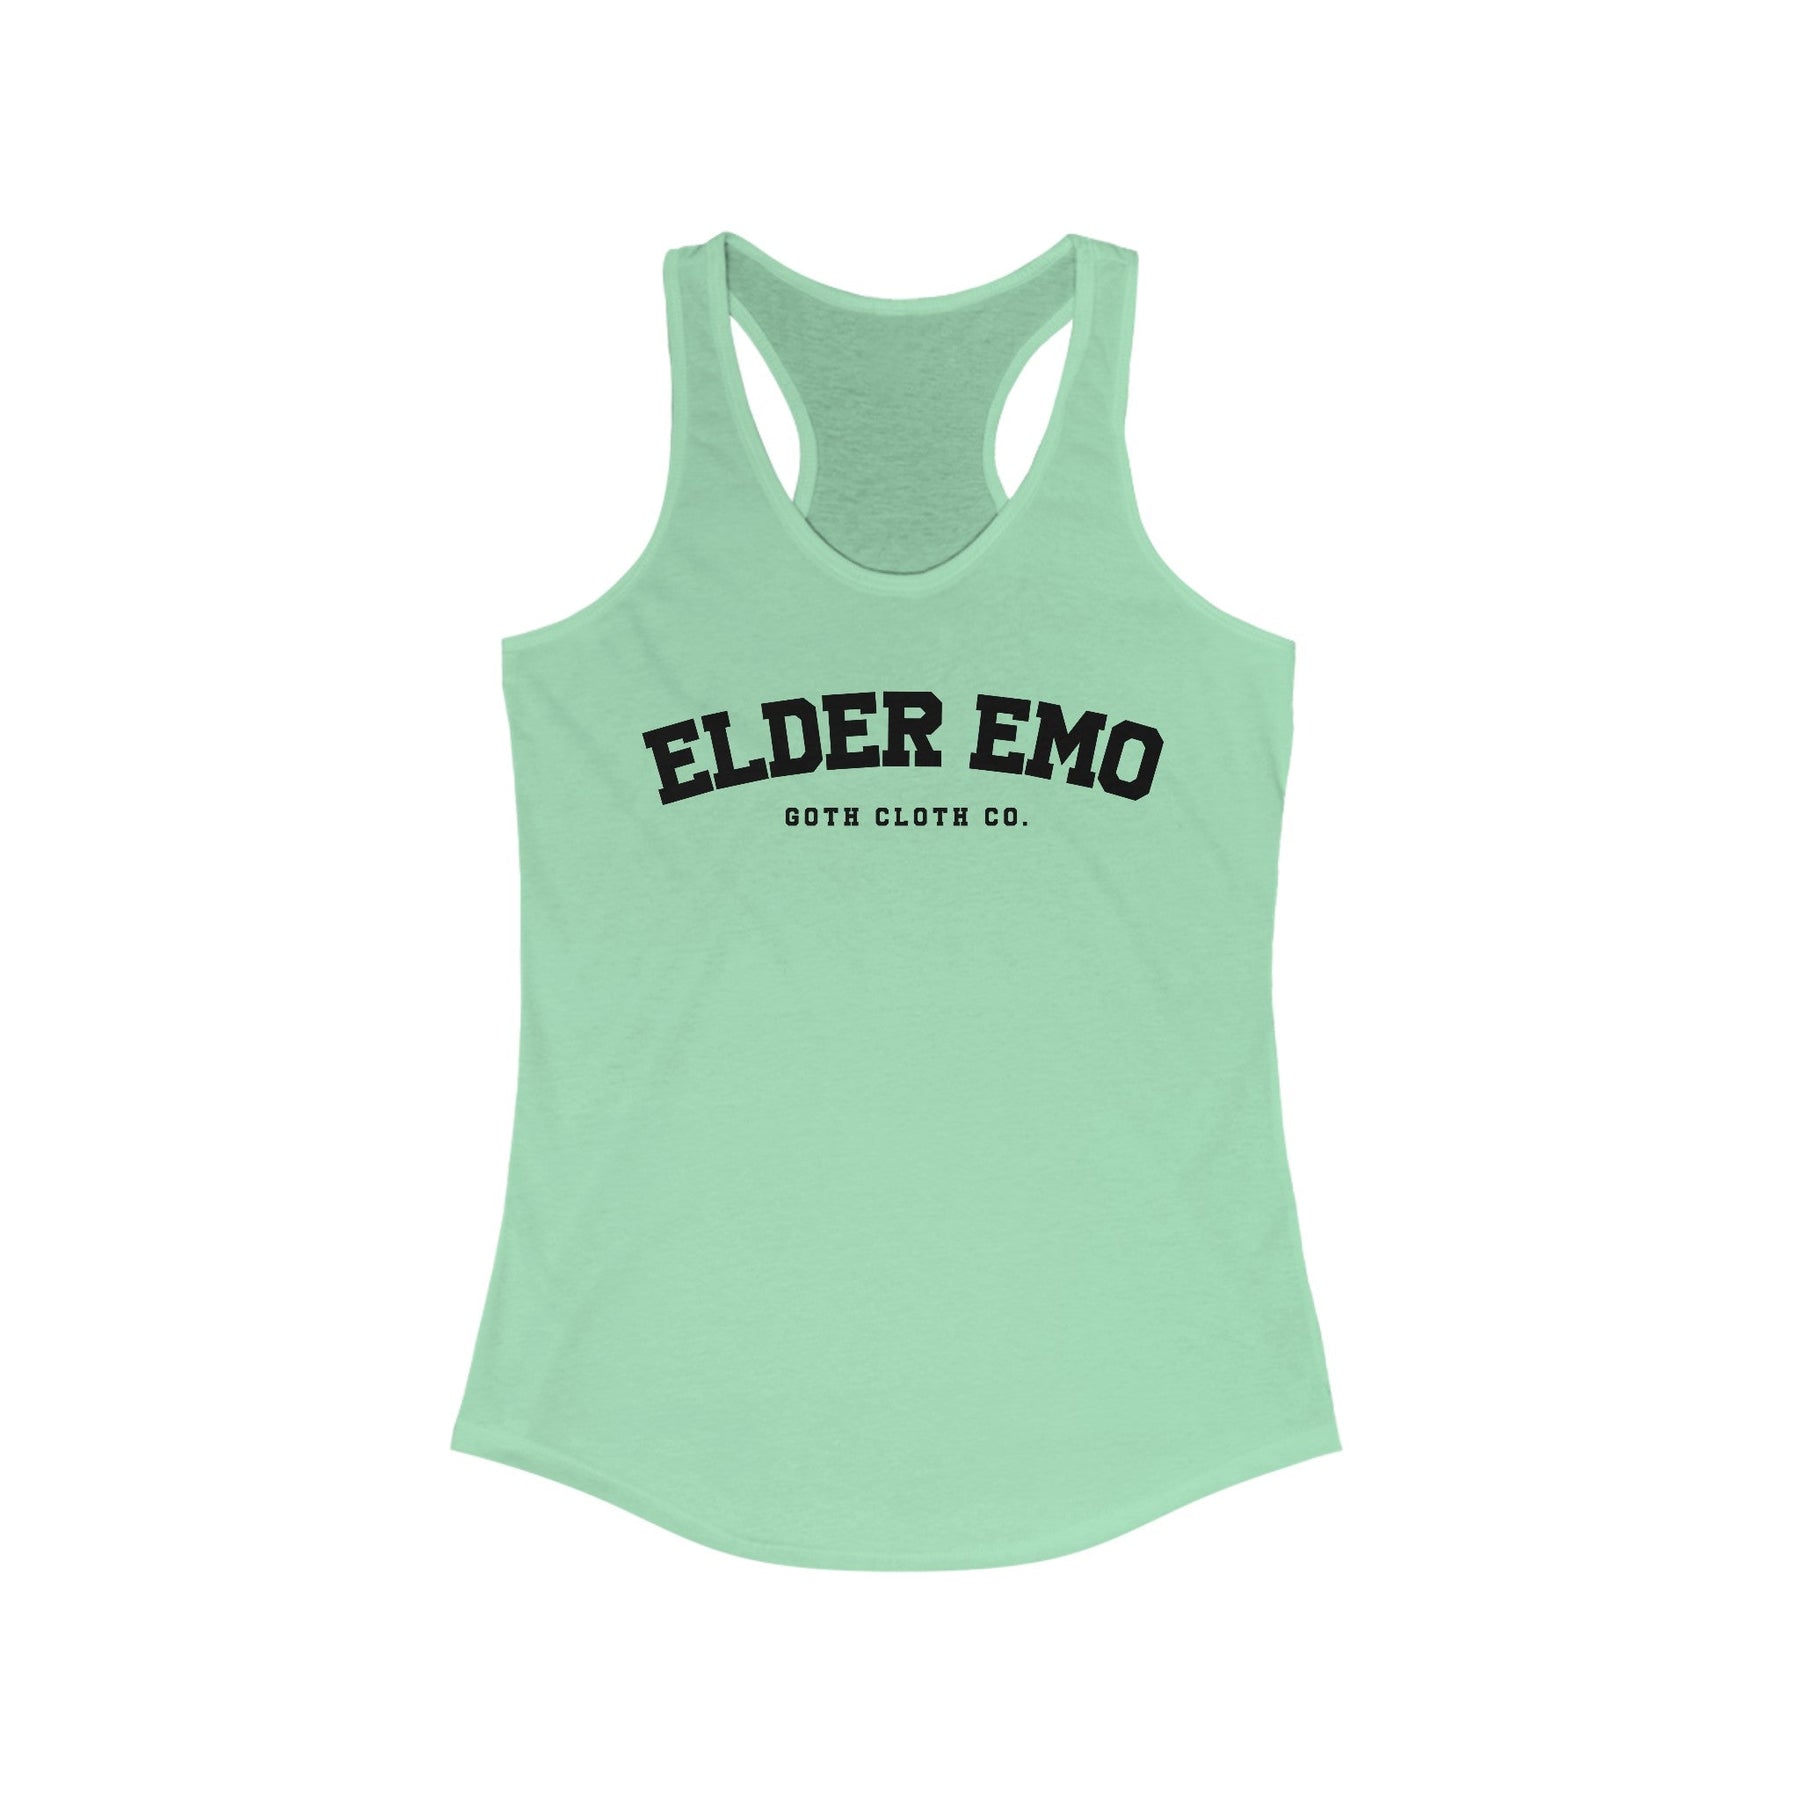 Elder Emo College Women's Racerback Tank - Goth Cloth Co.Tank Top48196044370737165160